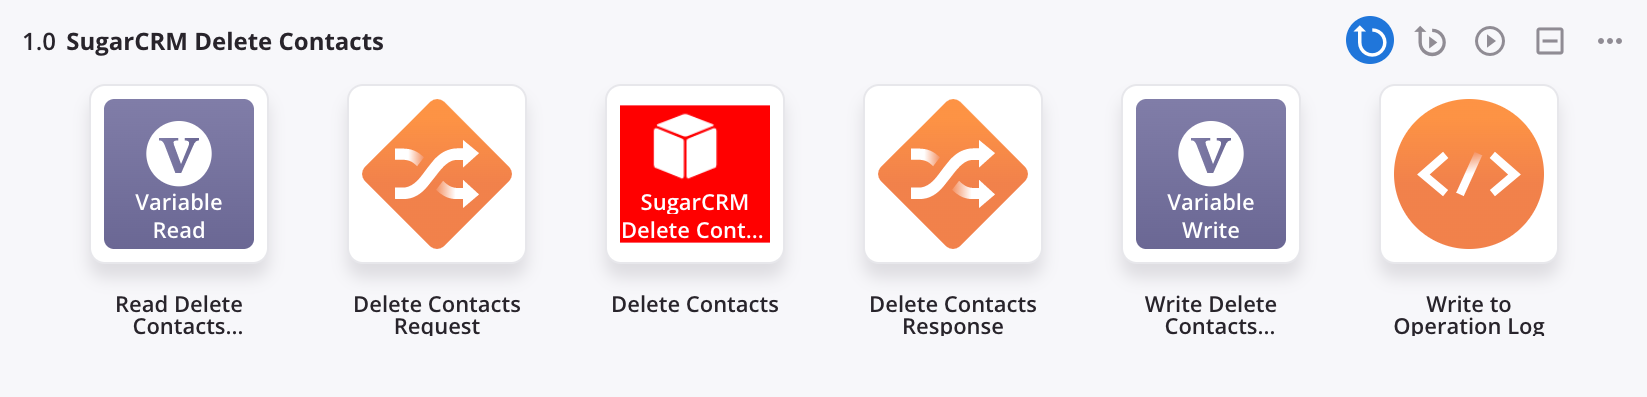 SugarCRM Delete Contacts operation